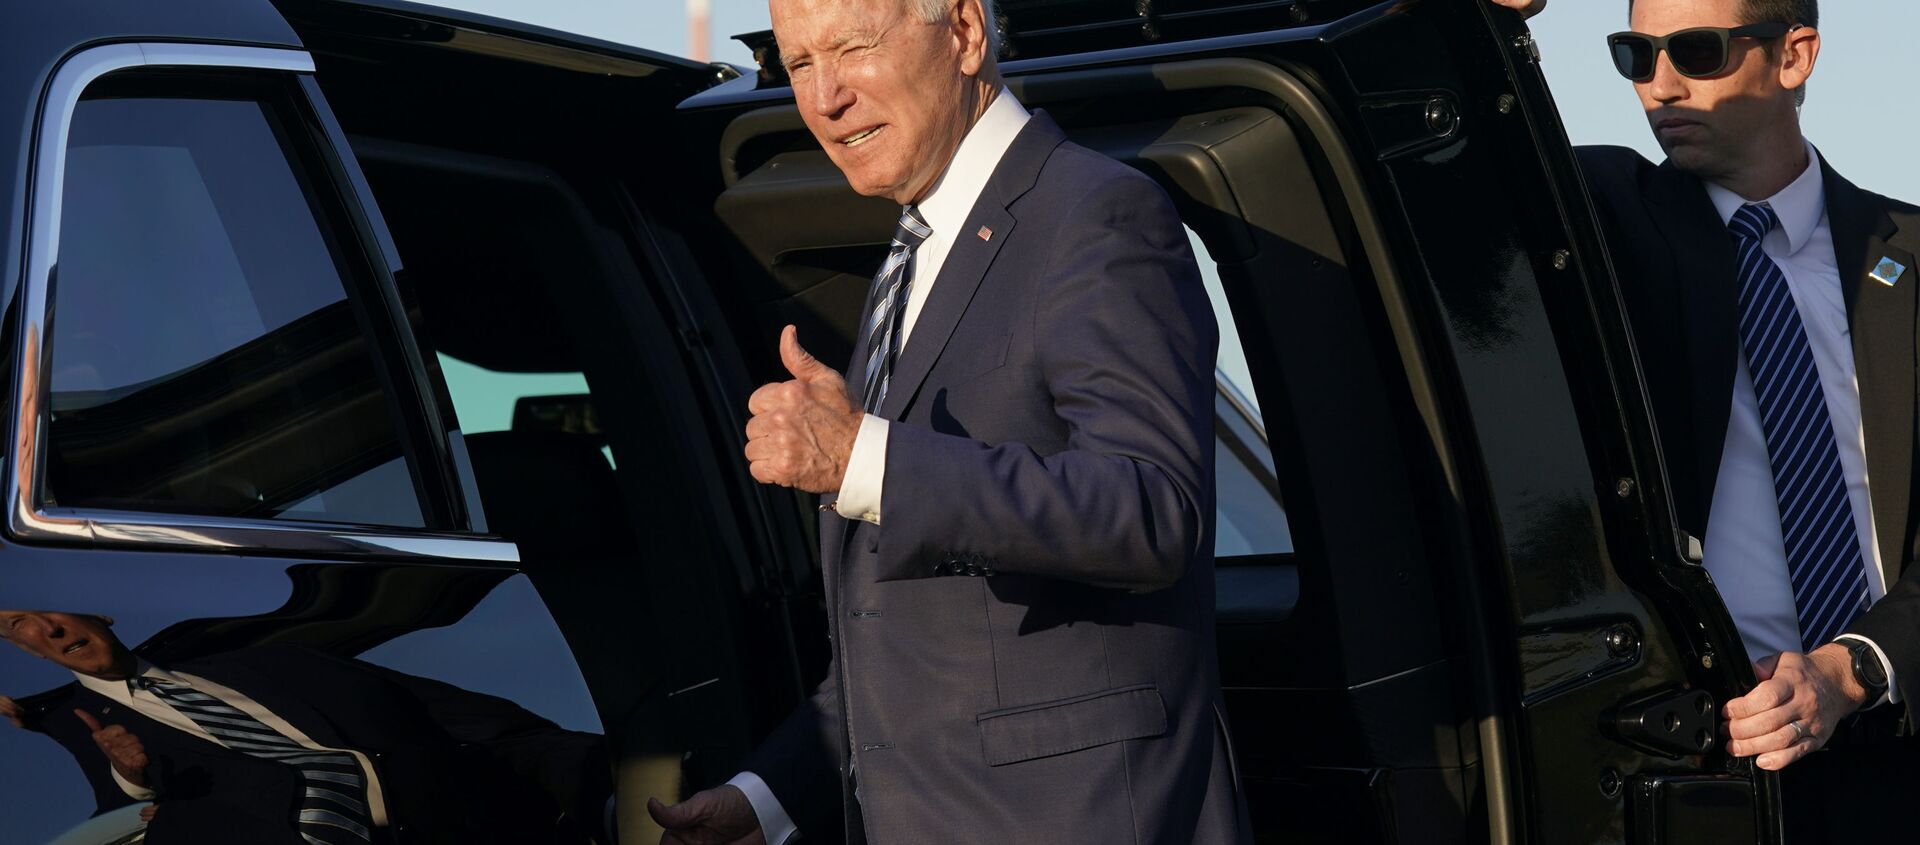 President Joe Biden steps into a motorcade vehicle after arriving at RAF Mildenhall in Suffolk, England, Wednesday, June 9, 2021. - Sputnik International, 1920, 15.06.2021